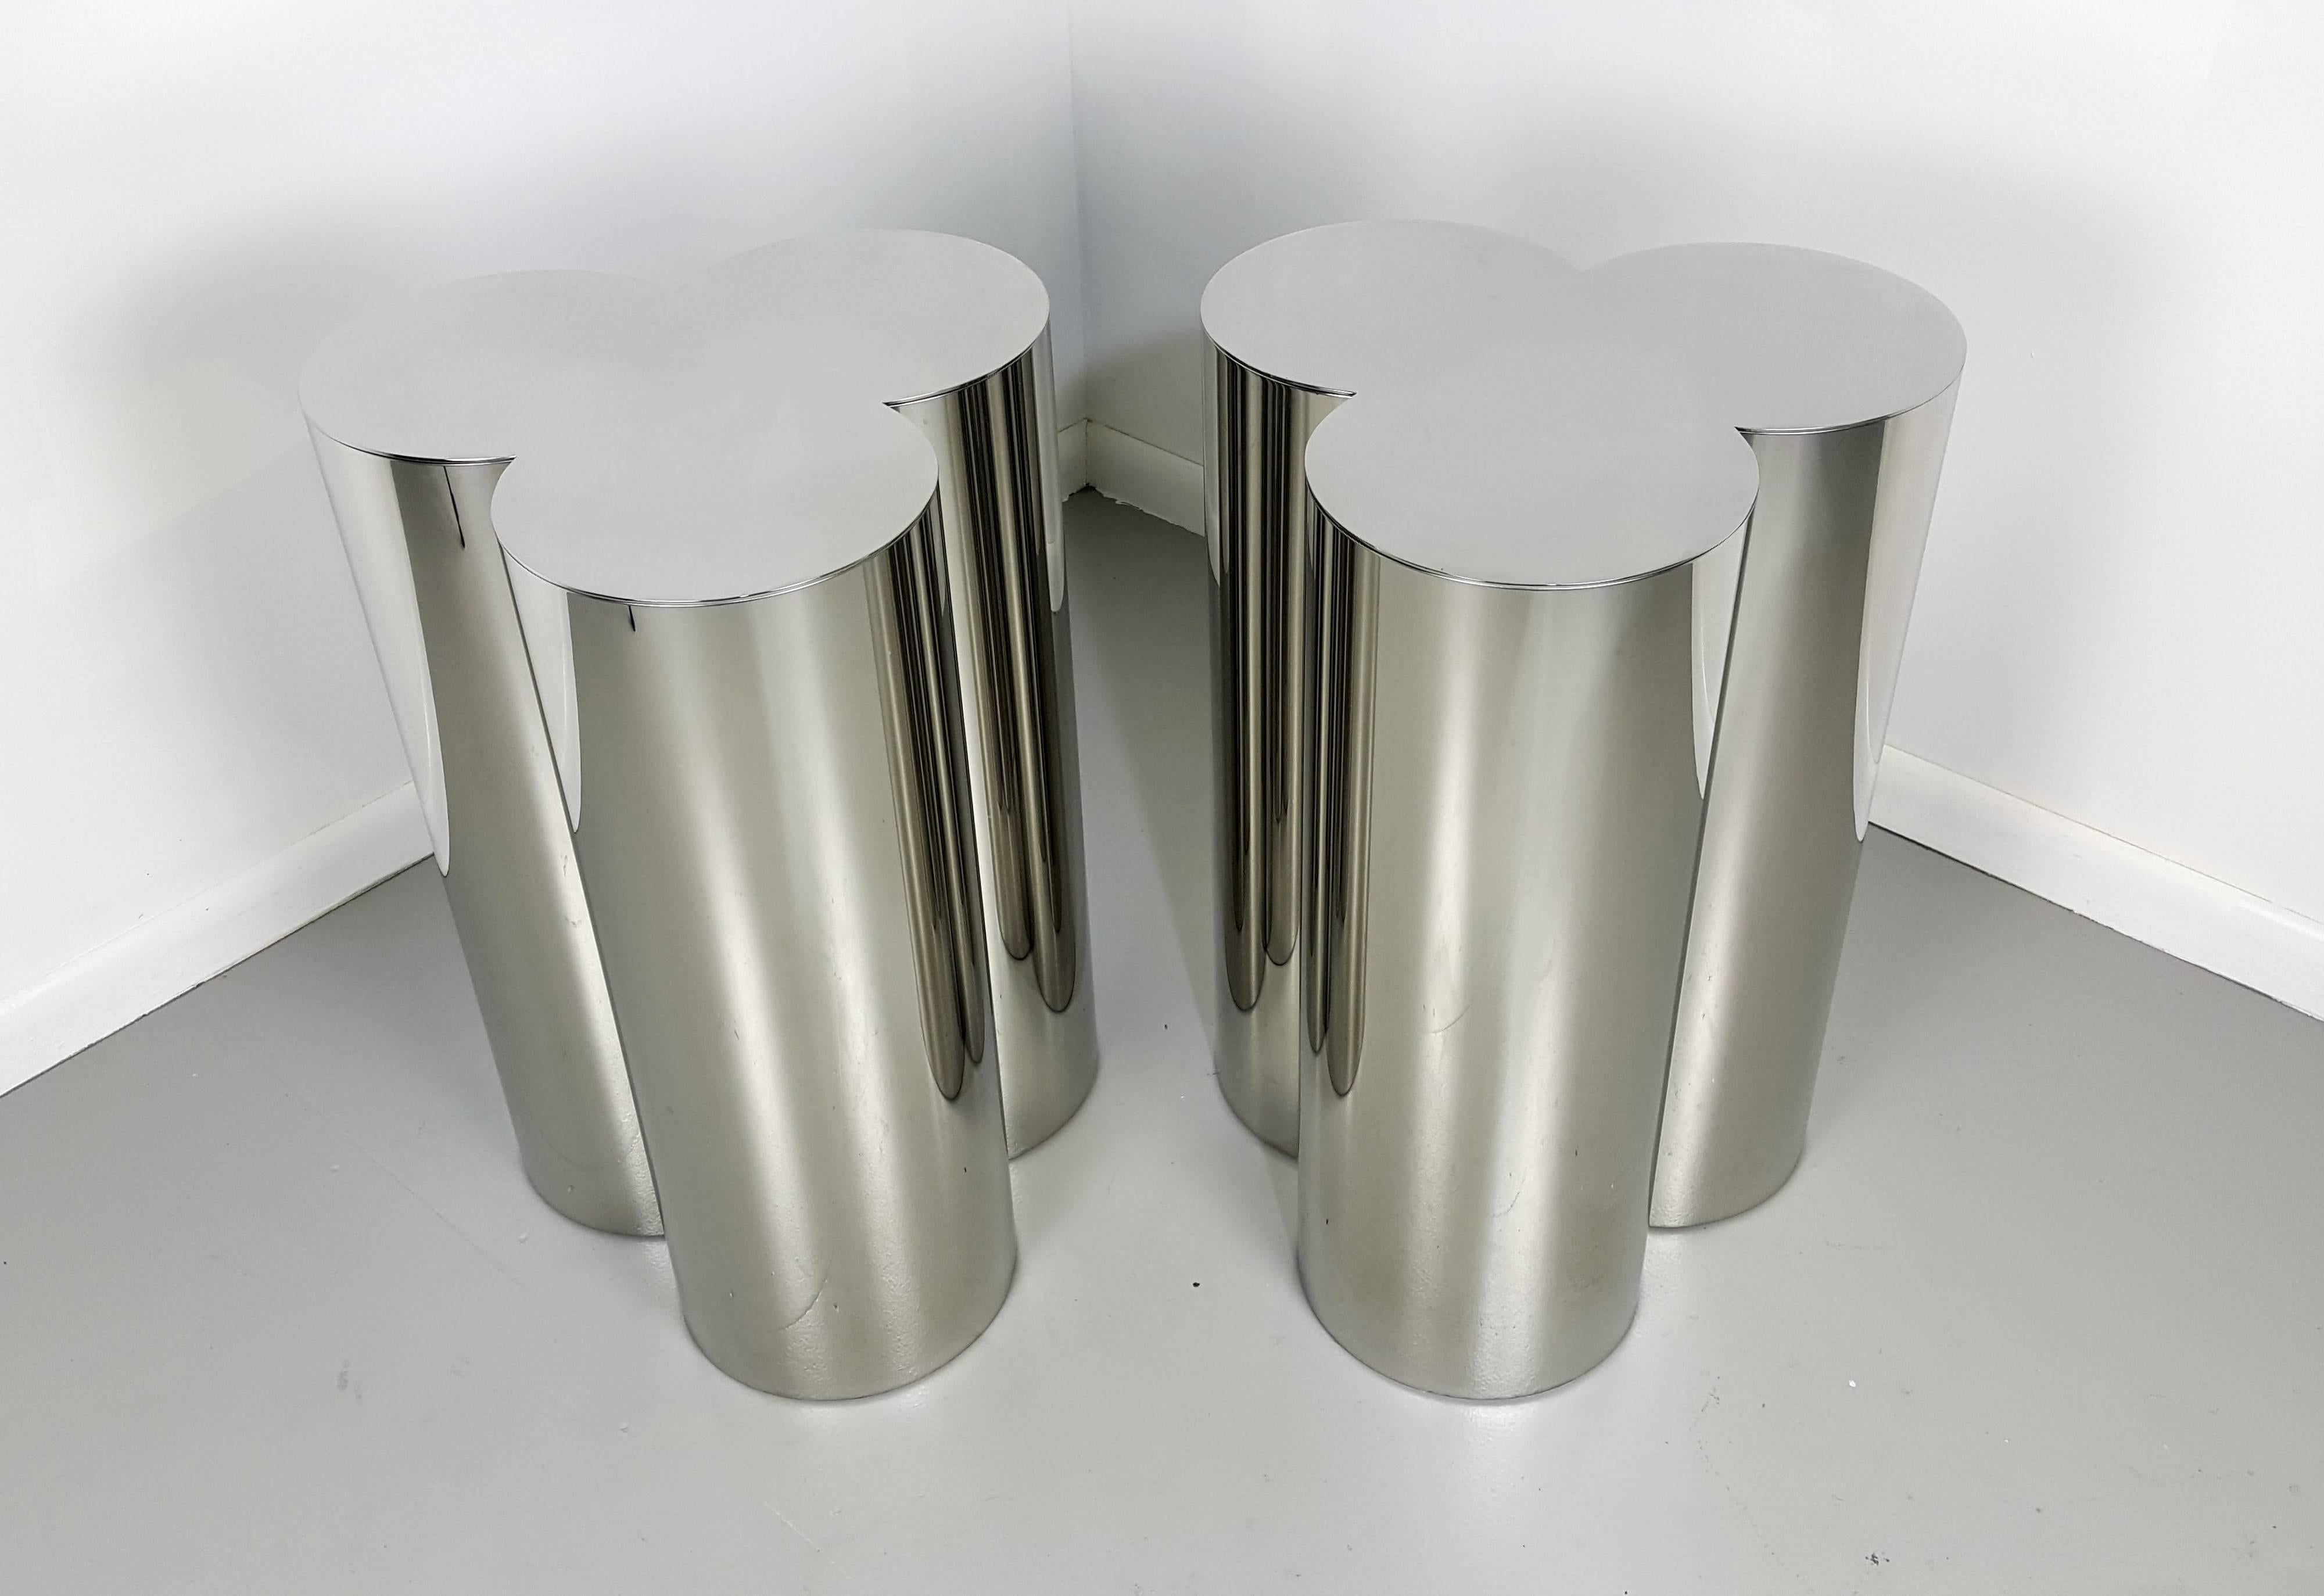 Hollywood Regency Custom Trefoil Dining Table Pedestal Bases in Mirror Polished Stainless Steel